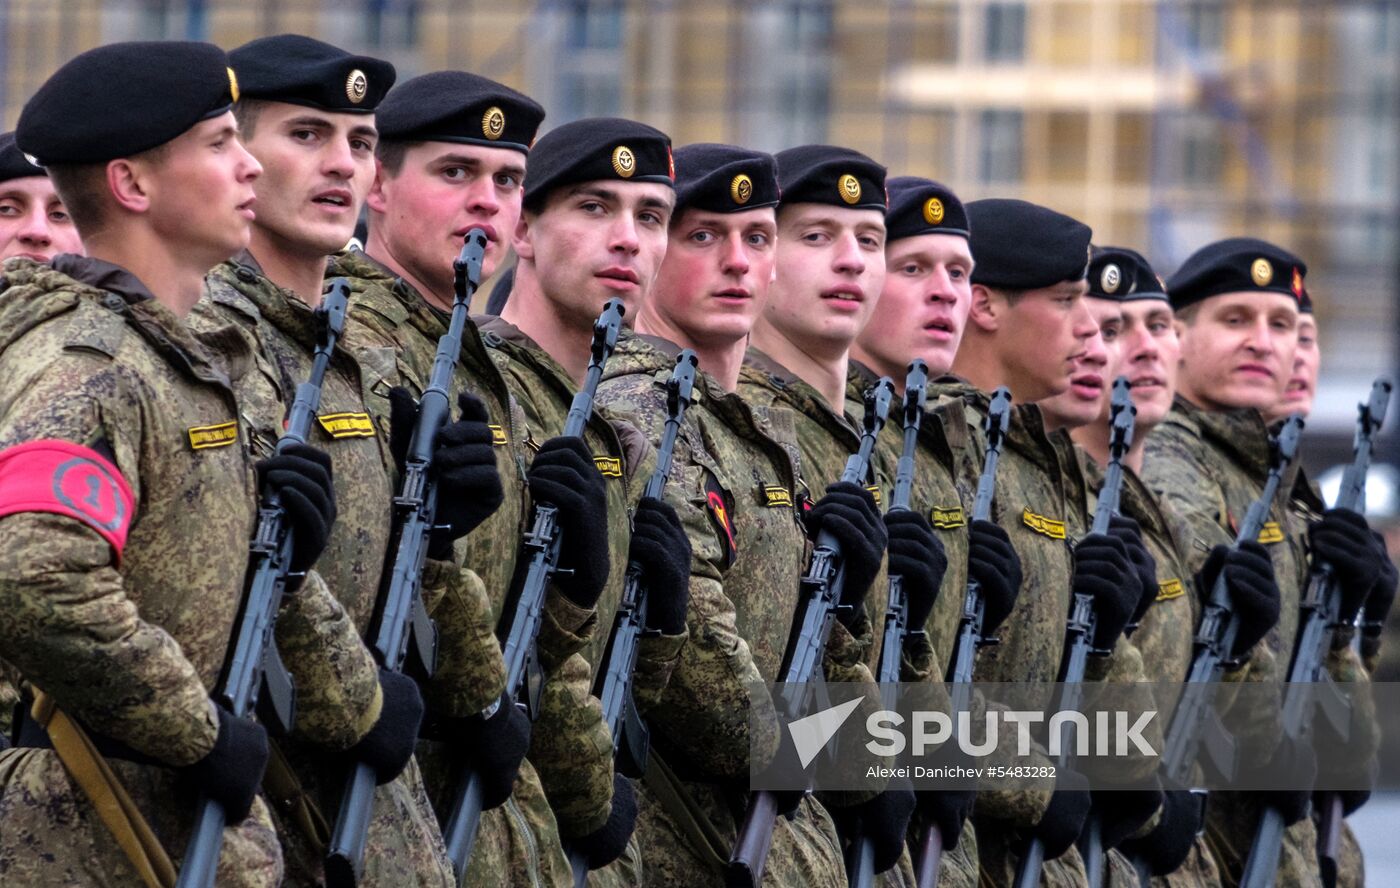 Victory Parade practice in St. Petersburg